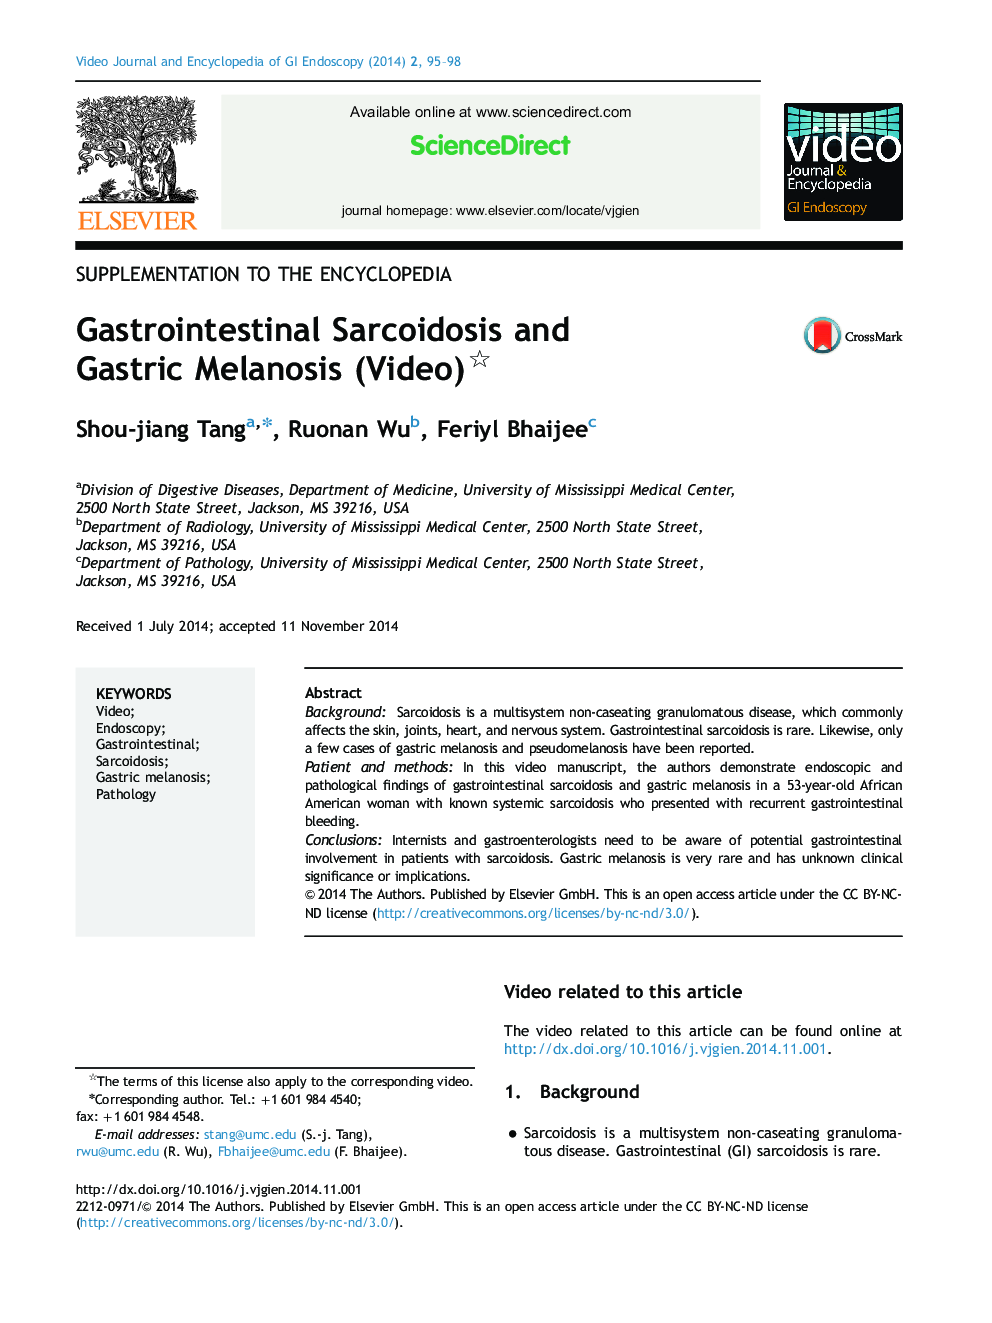 Gastrointestinal Sarcoidosis and Gastric Melanosis (Video) 